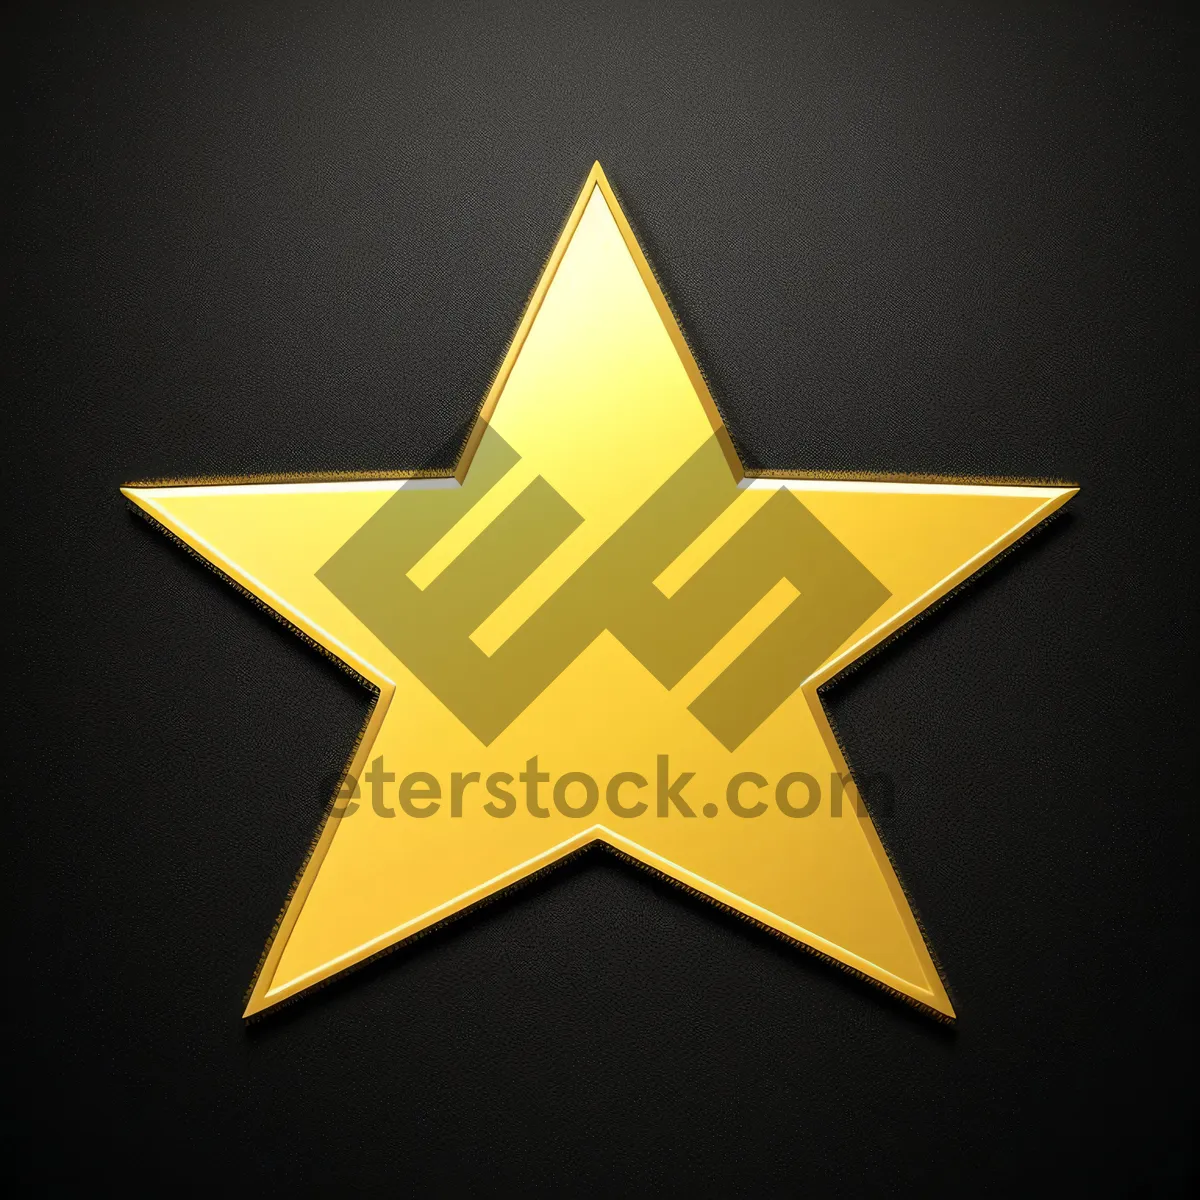 Picture of Golden Star Symbol Graphic Design